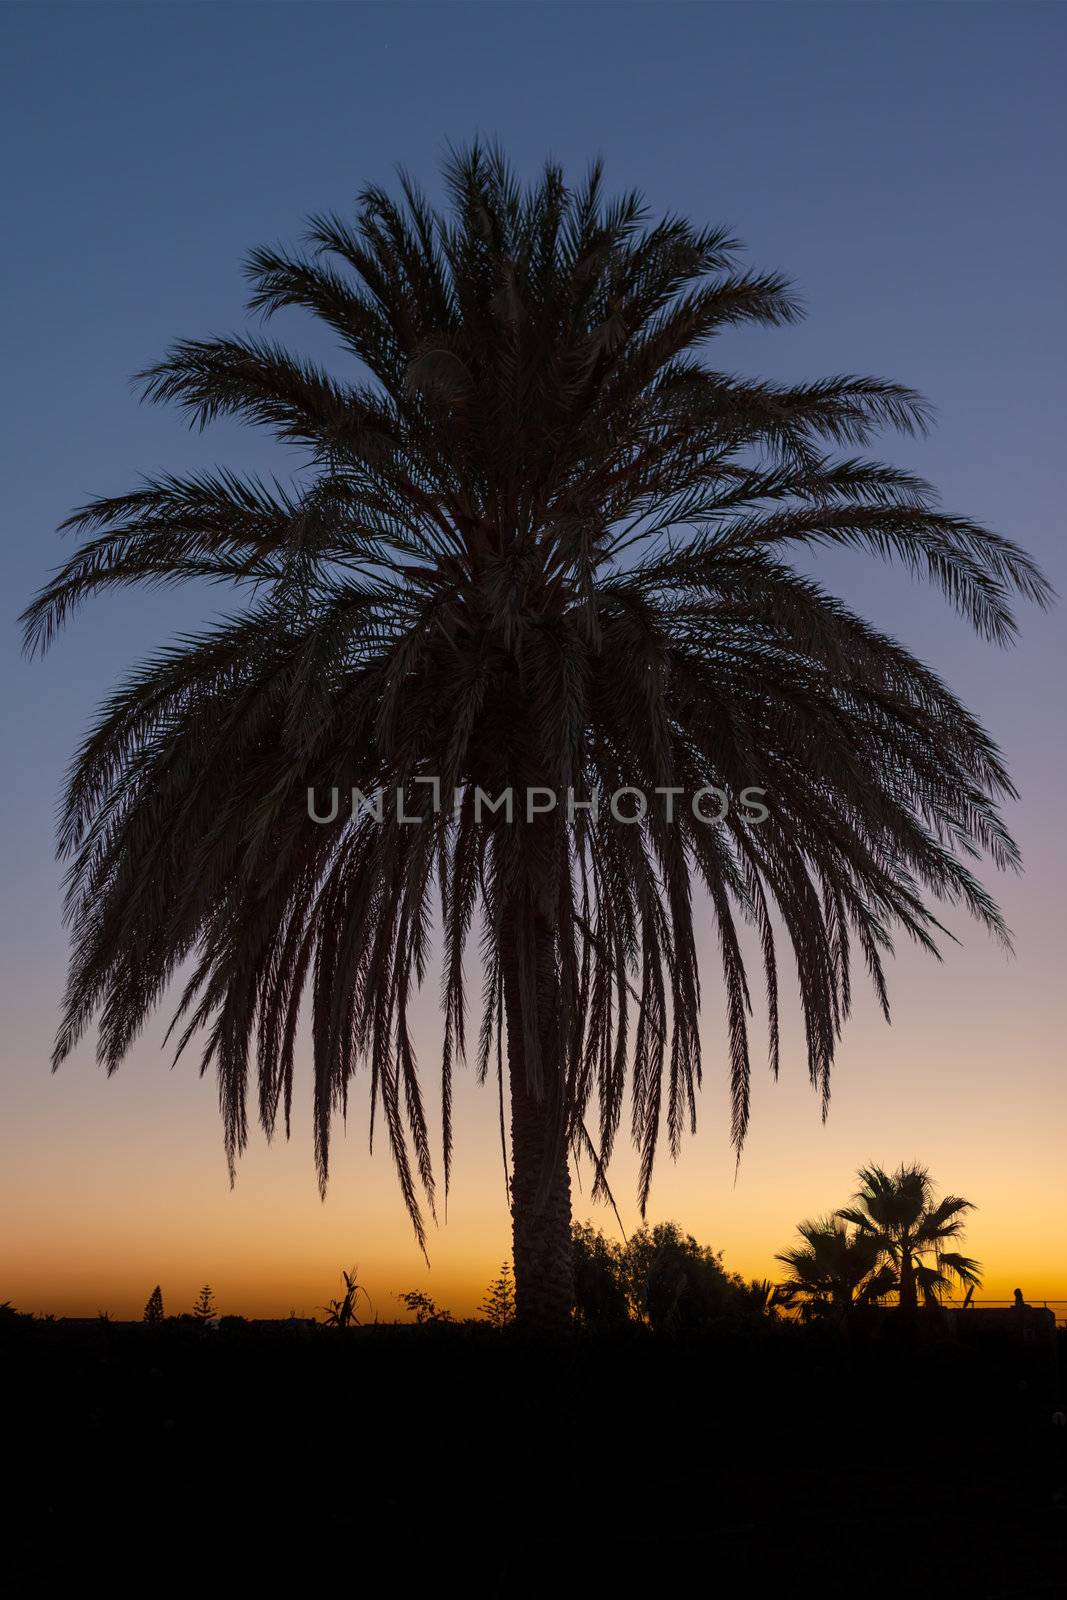 Palm tree after sunset taken in backlit